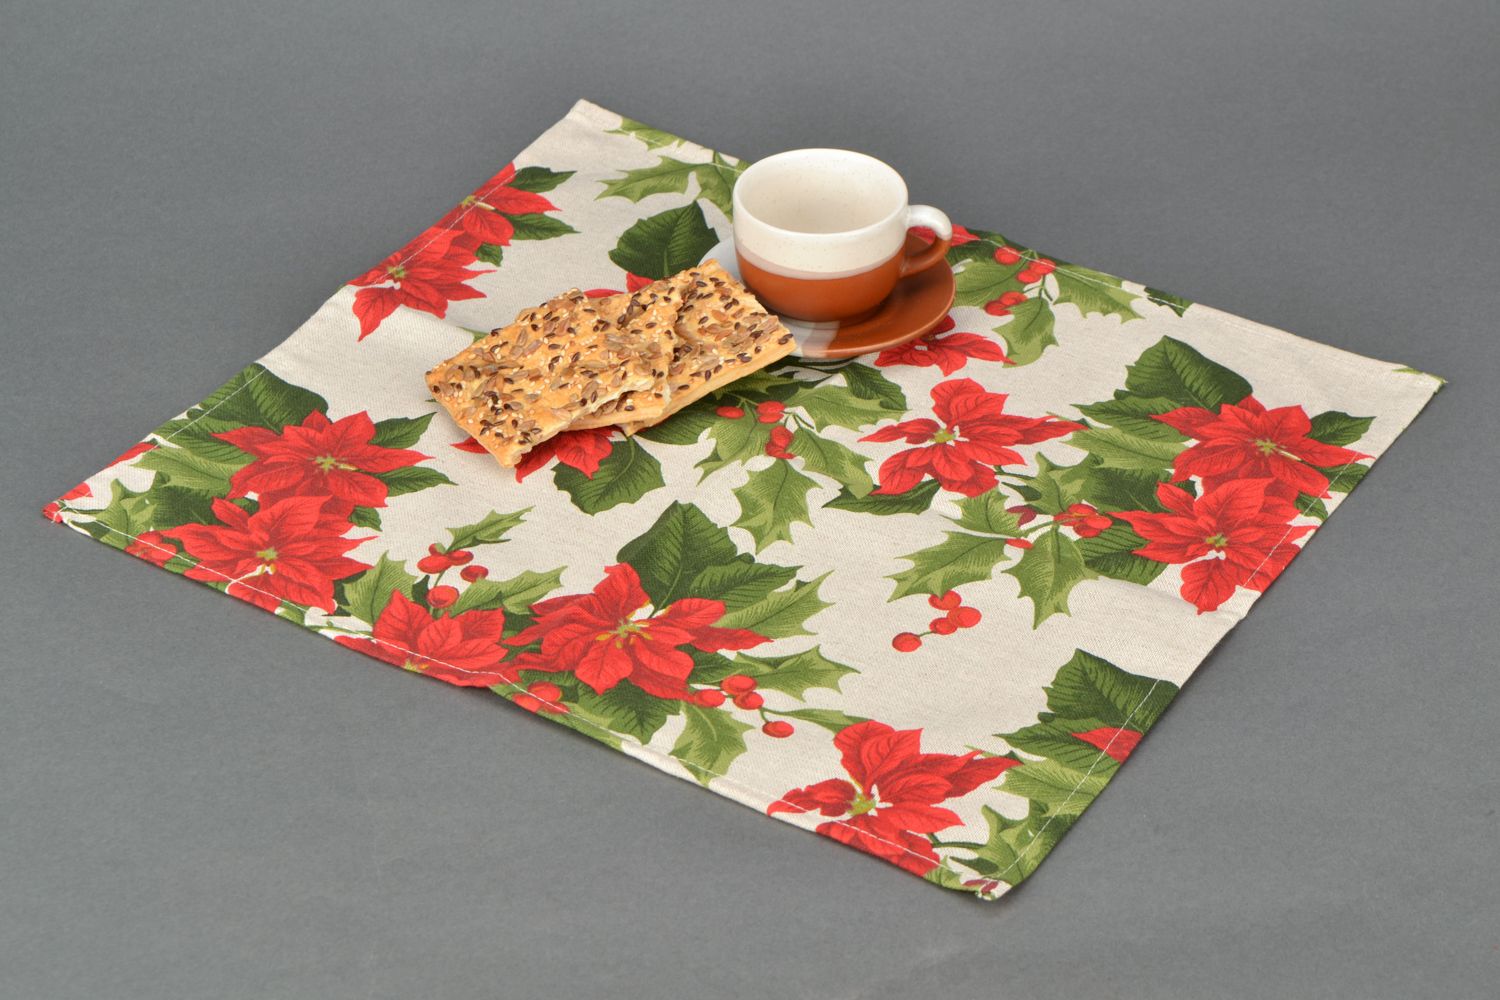 Decorative Christmas fabric napkin photo 1